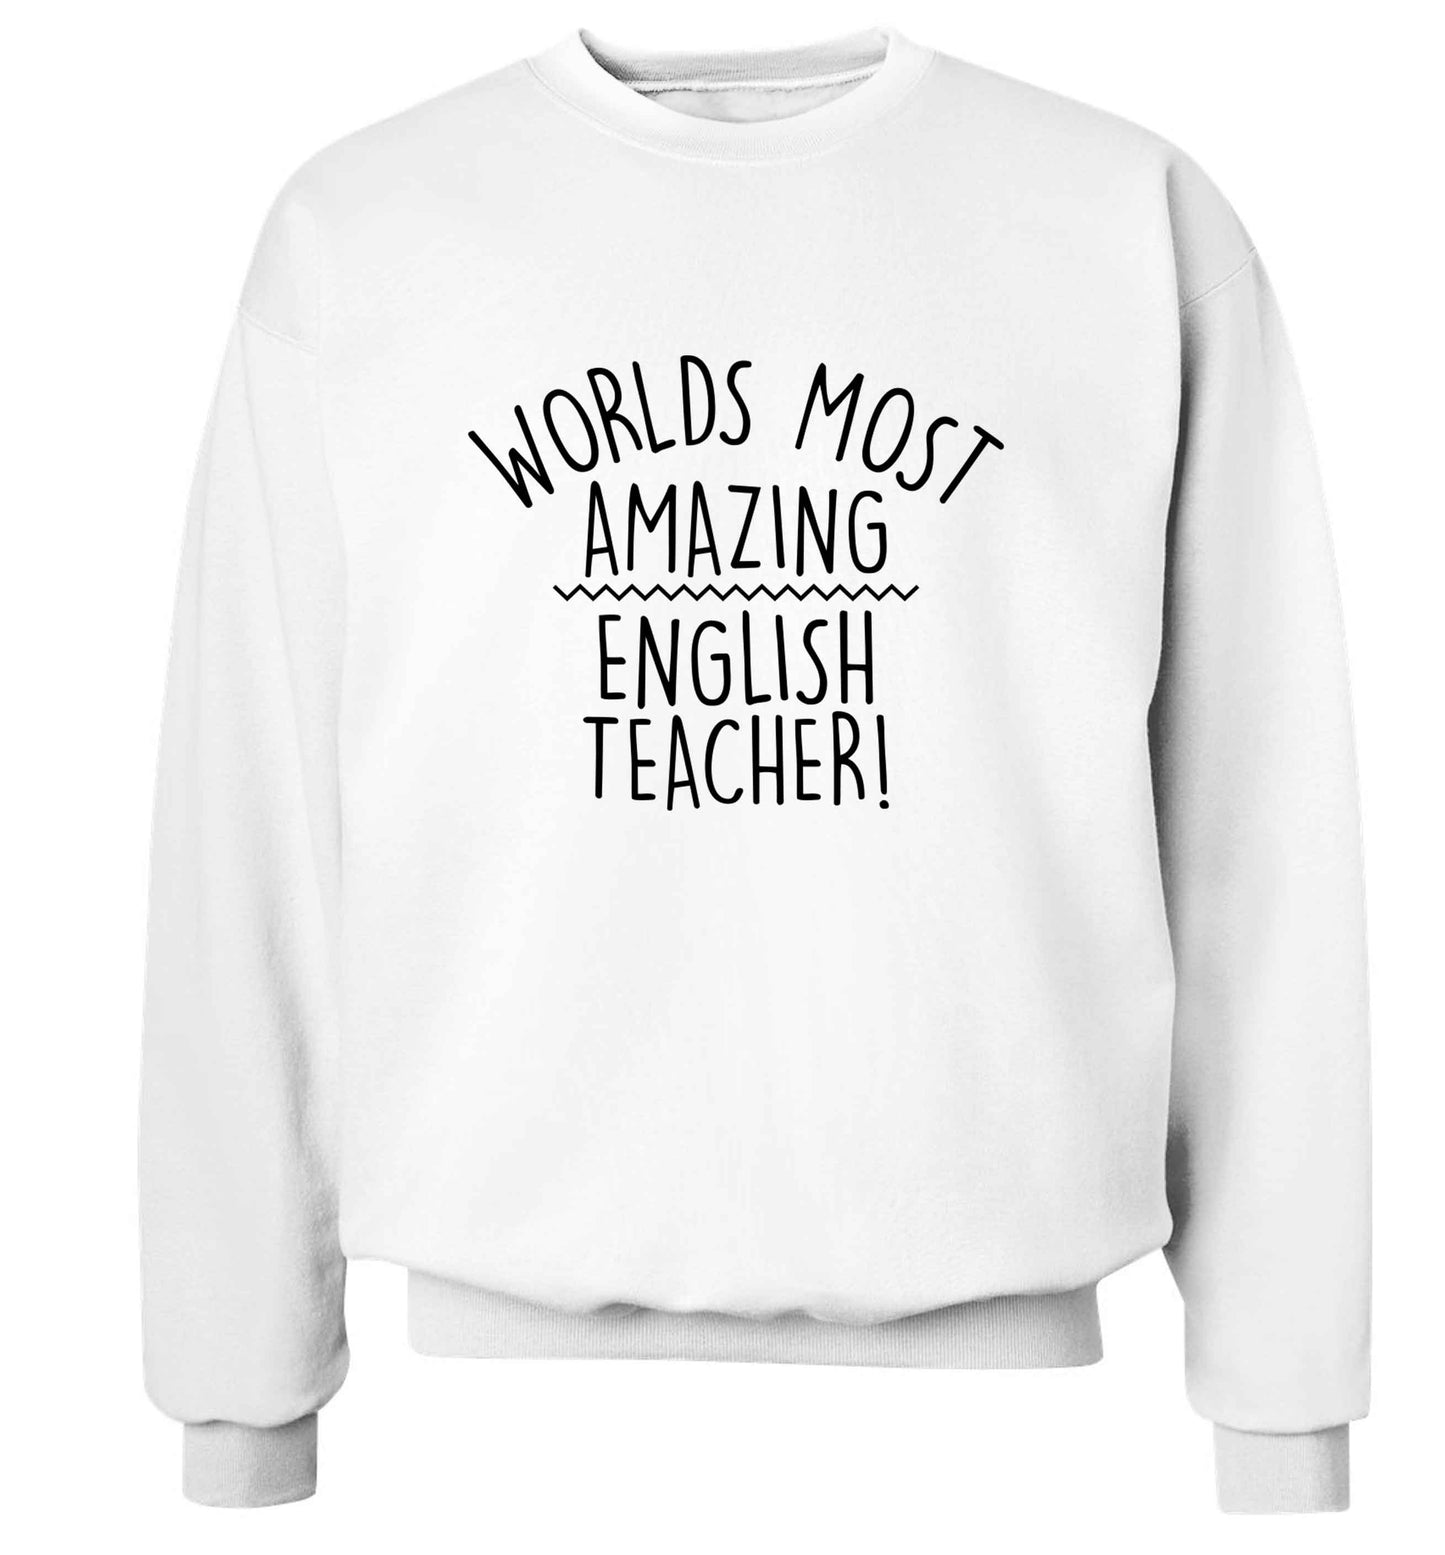 Worlds most amazing English teacher adult's unisex white sweater 2XL